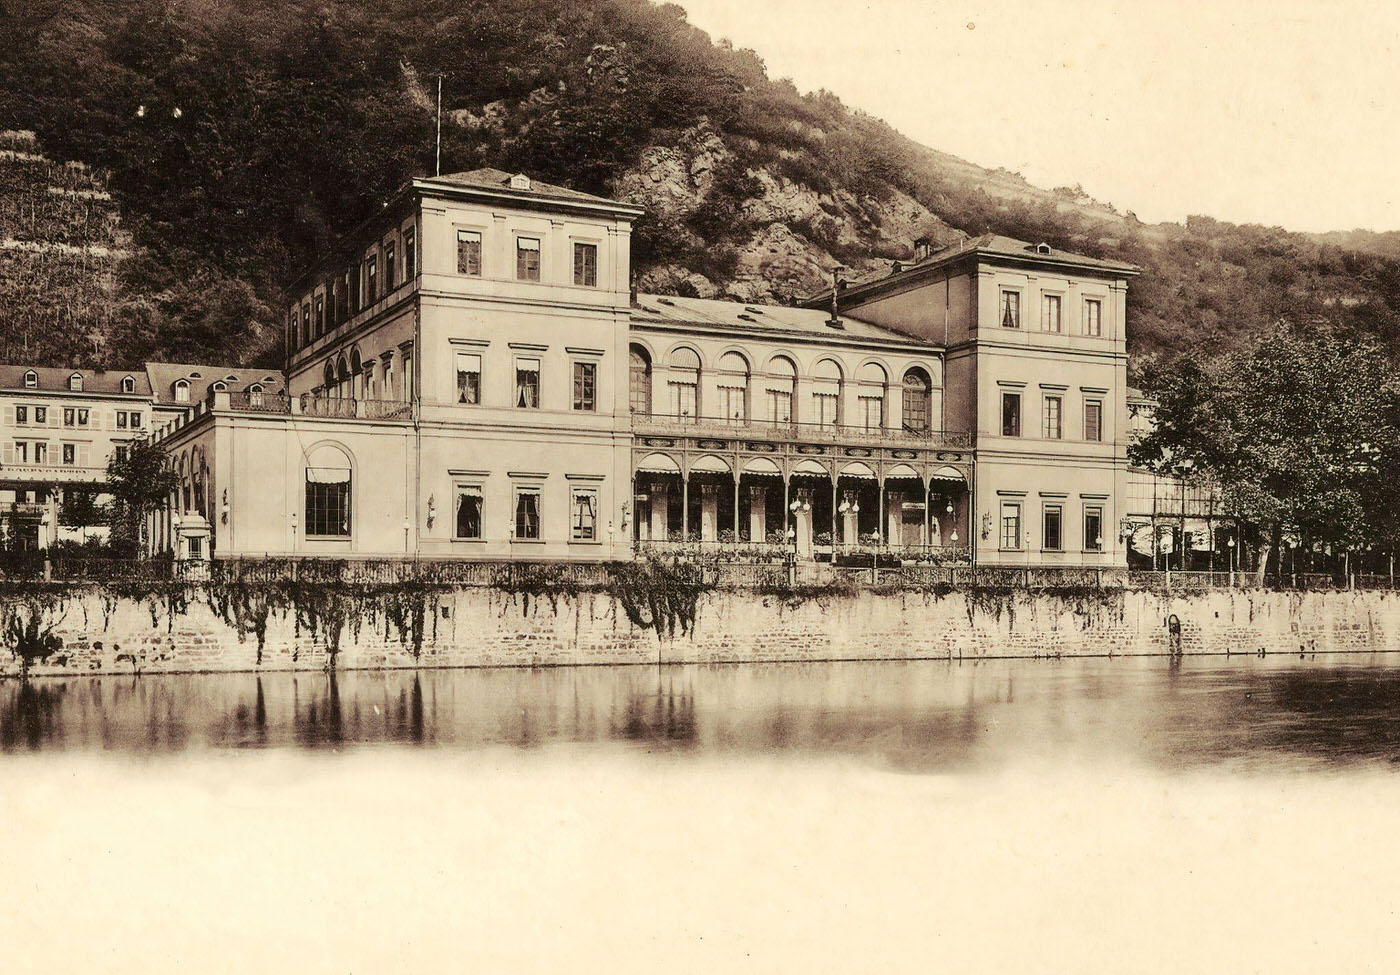 Spa buildings in Bad Ems, Lahn, Rhineland-Palatinate, 1898.